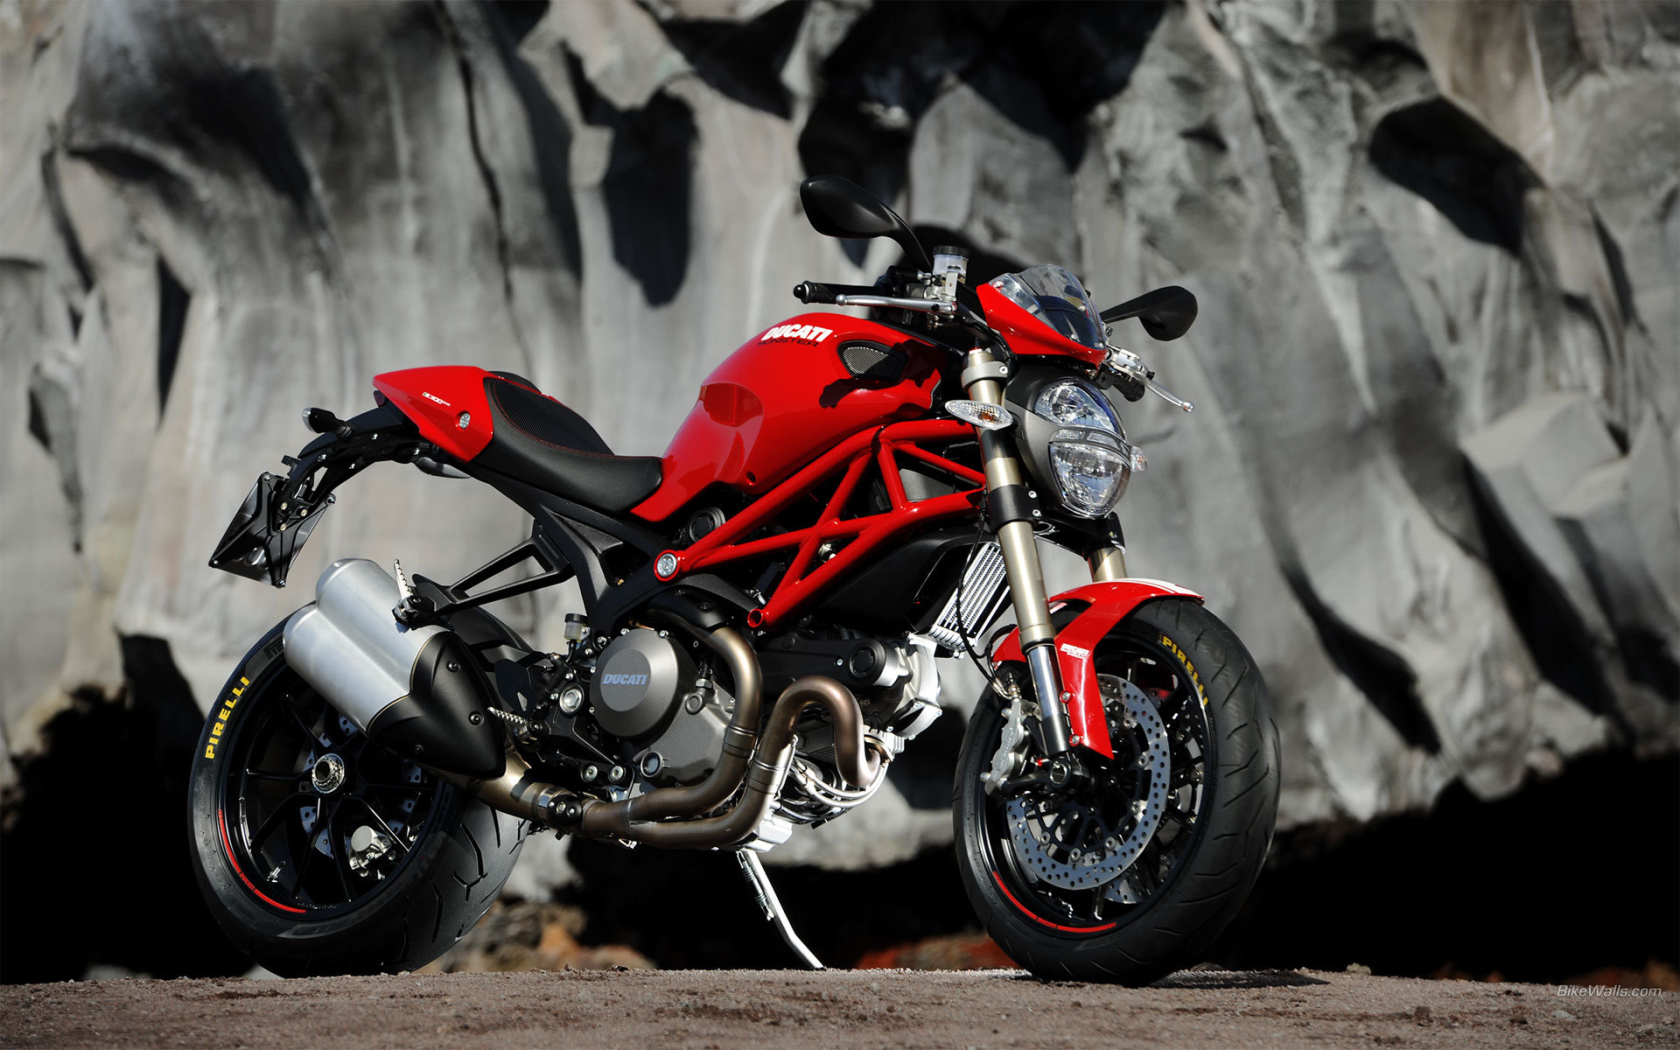 Невероятно быстрый мотоцикл Ducati Monster 1200